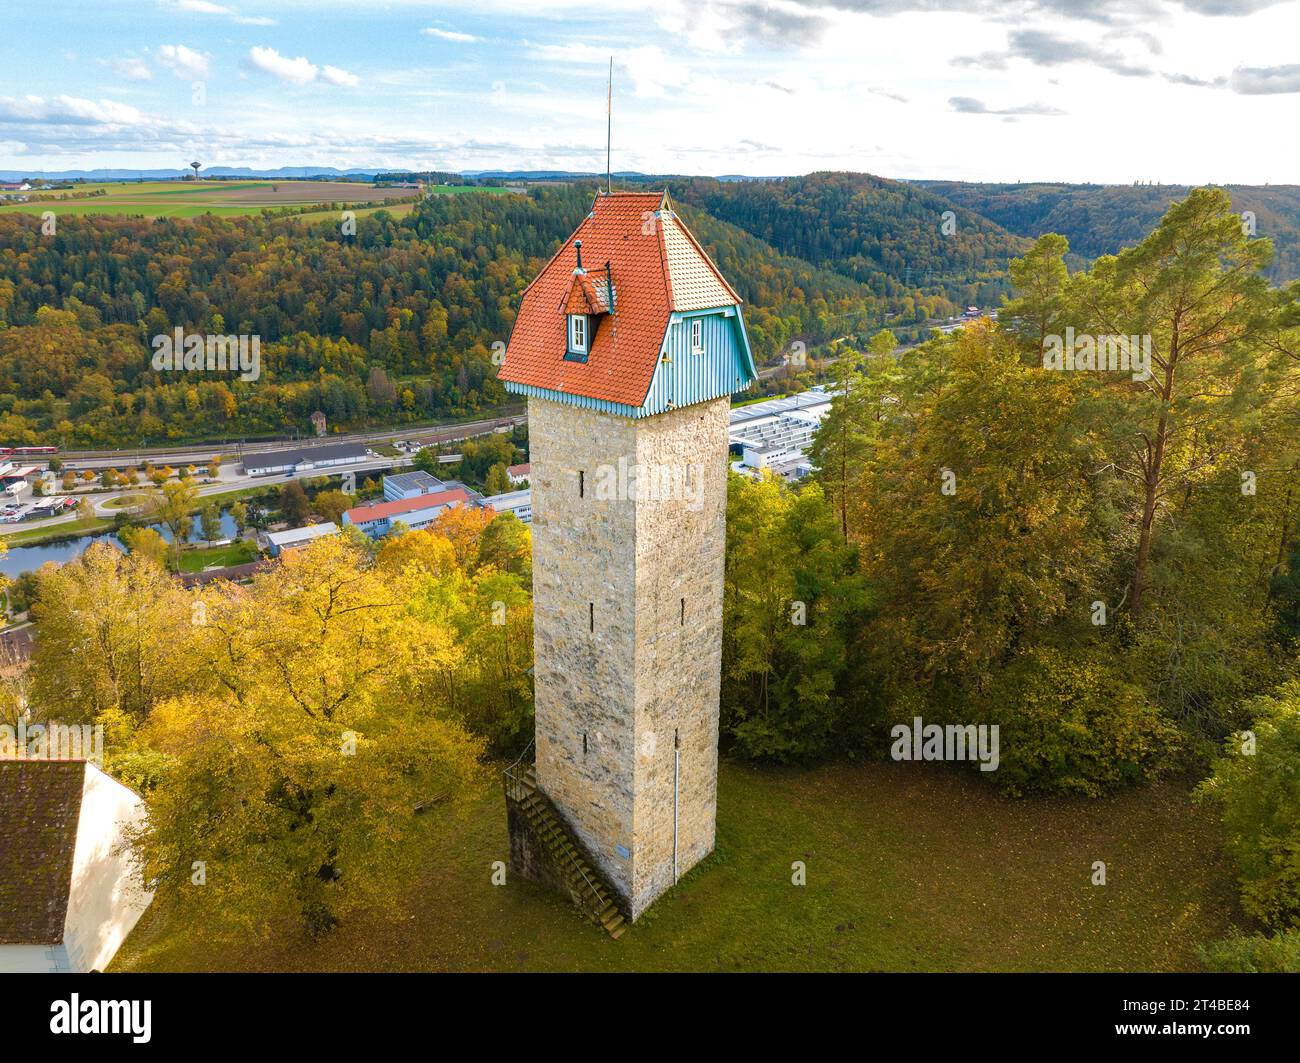 Historic tower in the autumn forest, Schuetteturm, Horb am Neckar, Germany Stock Photo